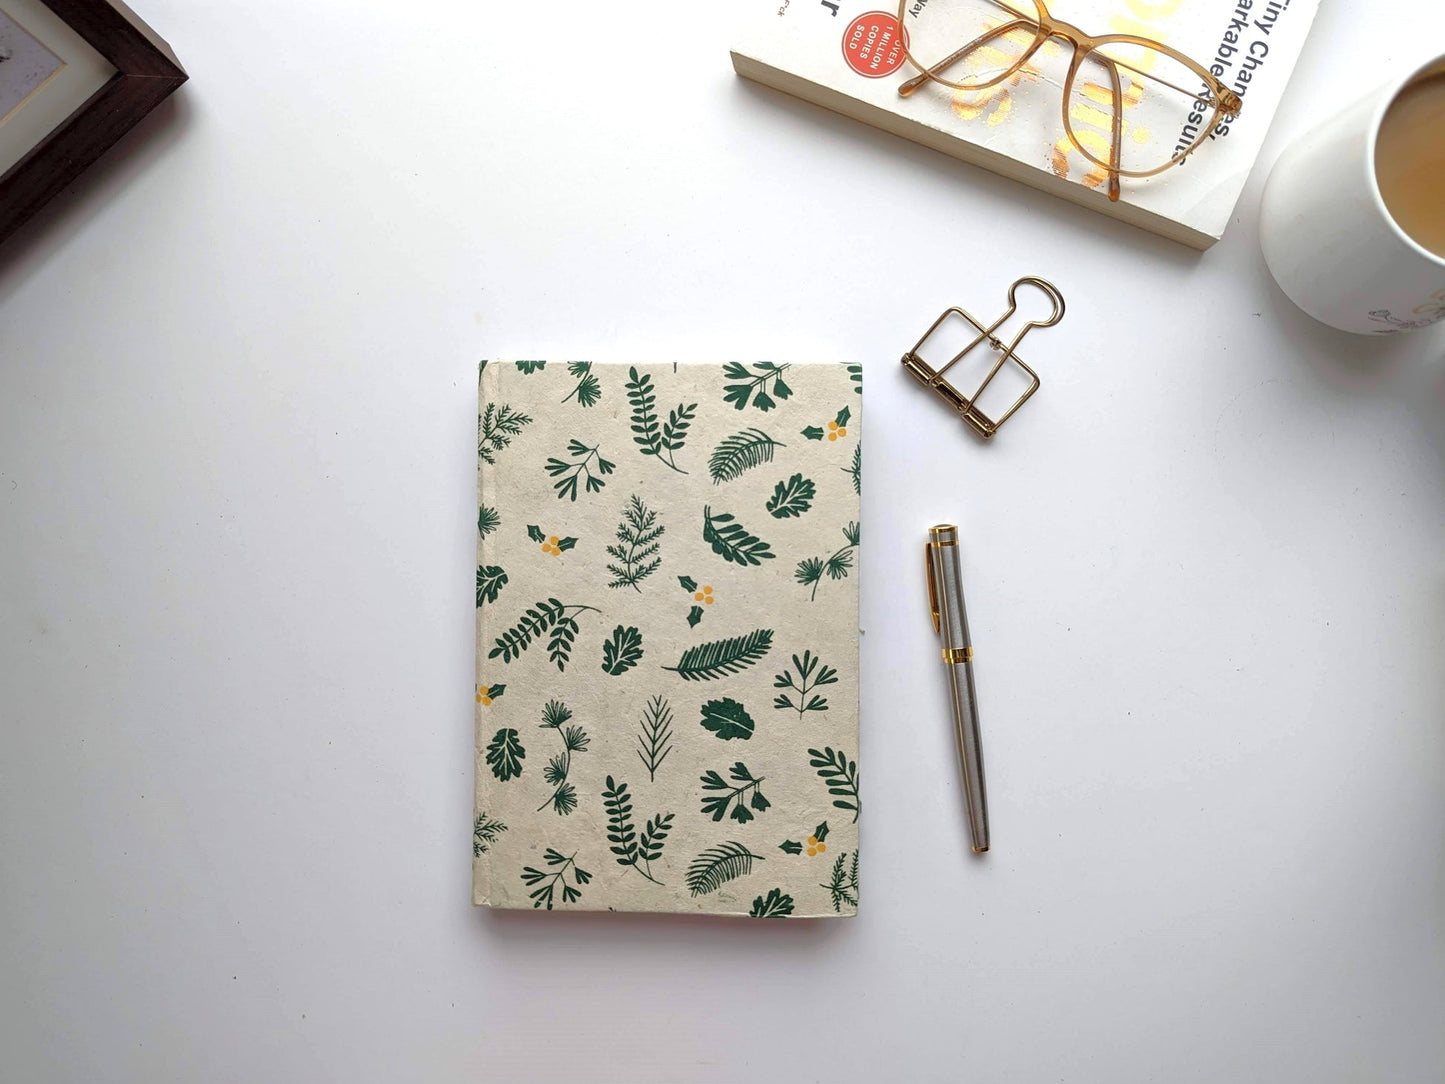 Keepsake box with Hardcover Journal set (2 books) | Emerald Green on Beige